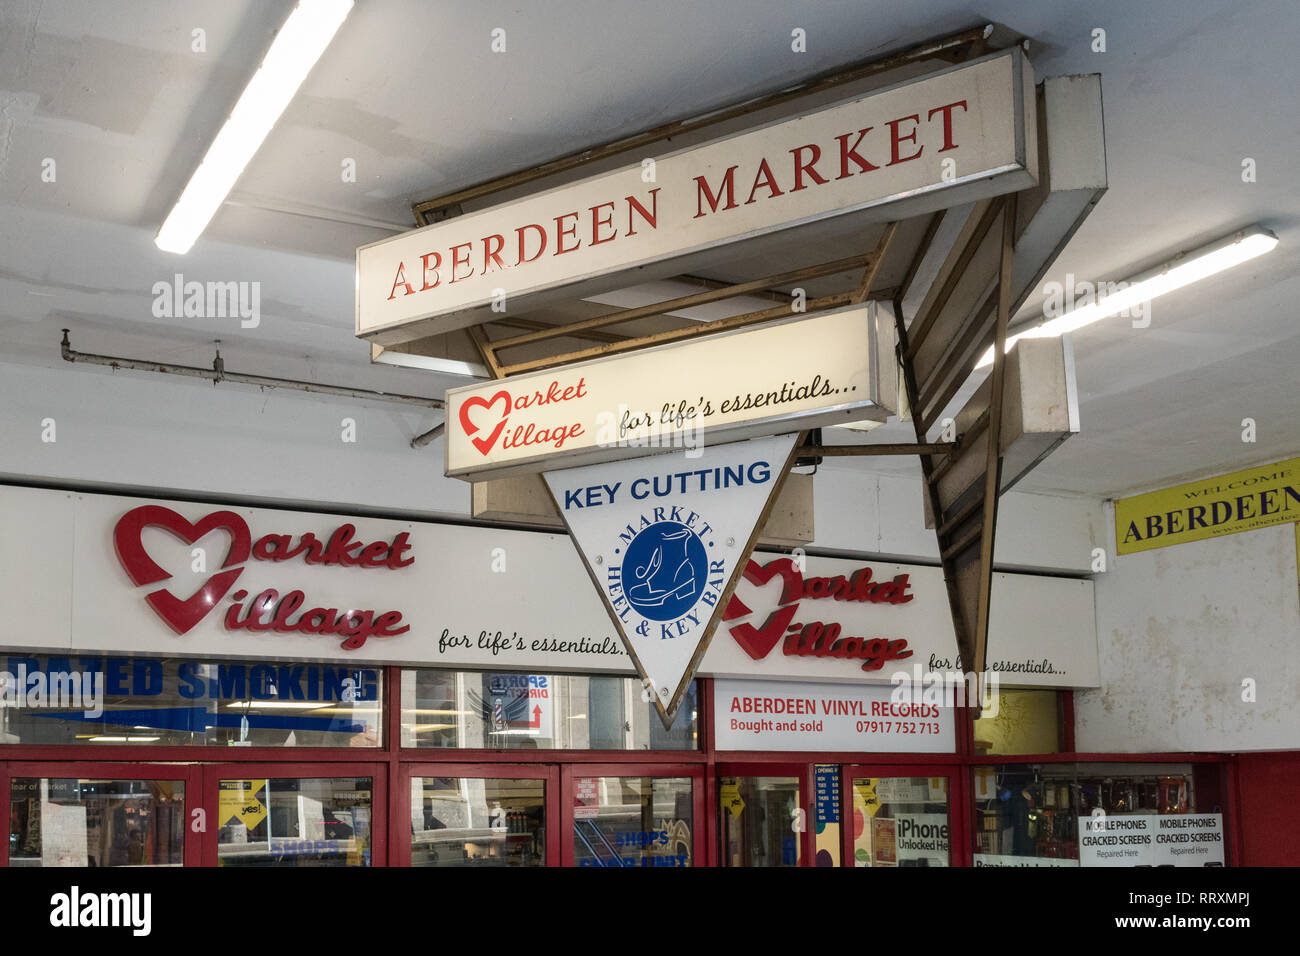 Aberdeen indoor market sign, Aberdeen, Scotland, UK Stock Photo